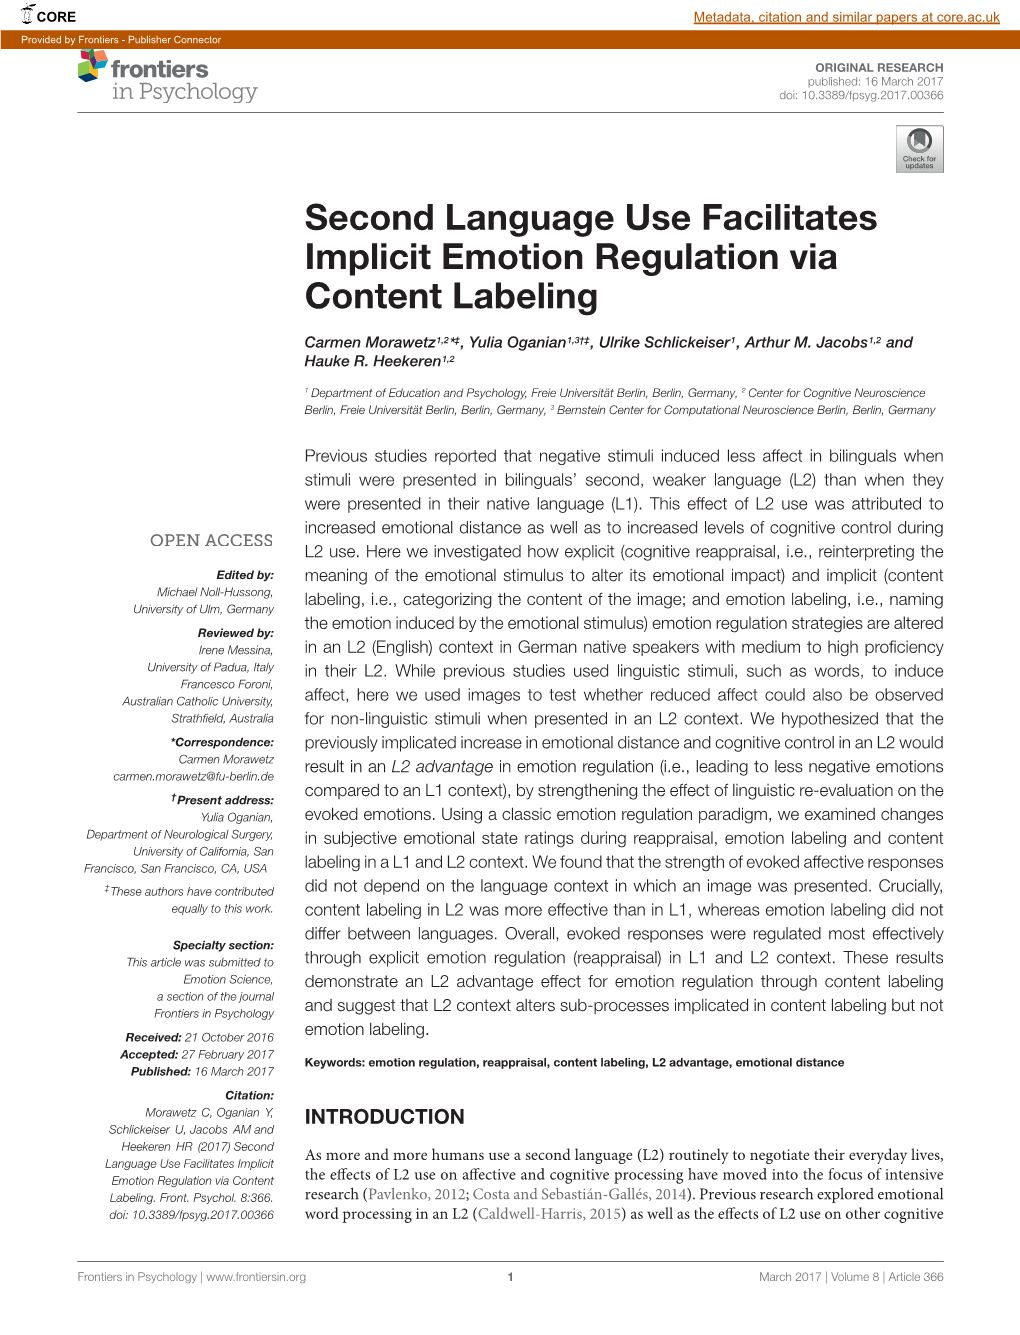 Second Language Use Facilitates Implicit Emotion Regulation Via Content Labeling